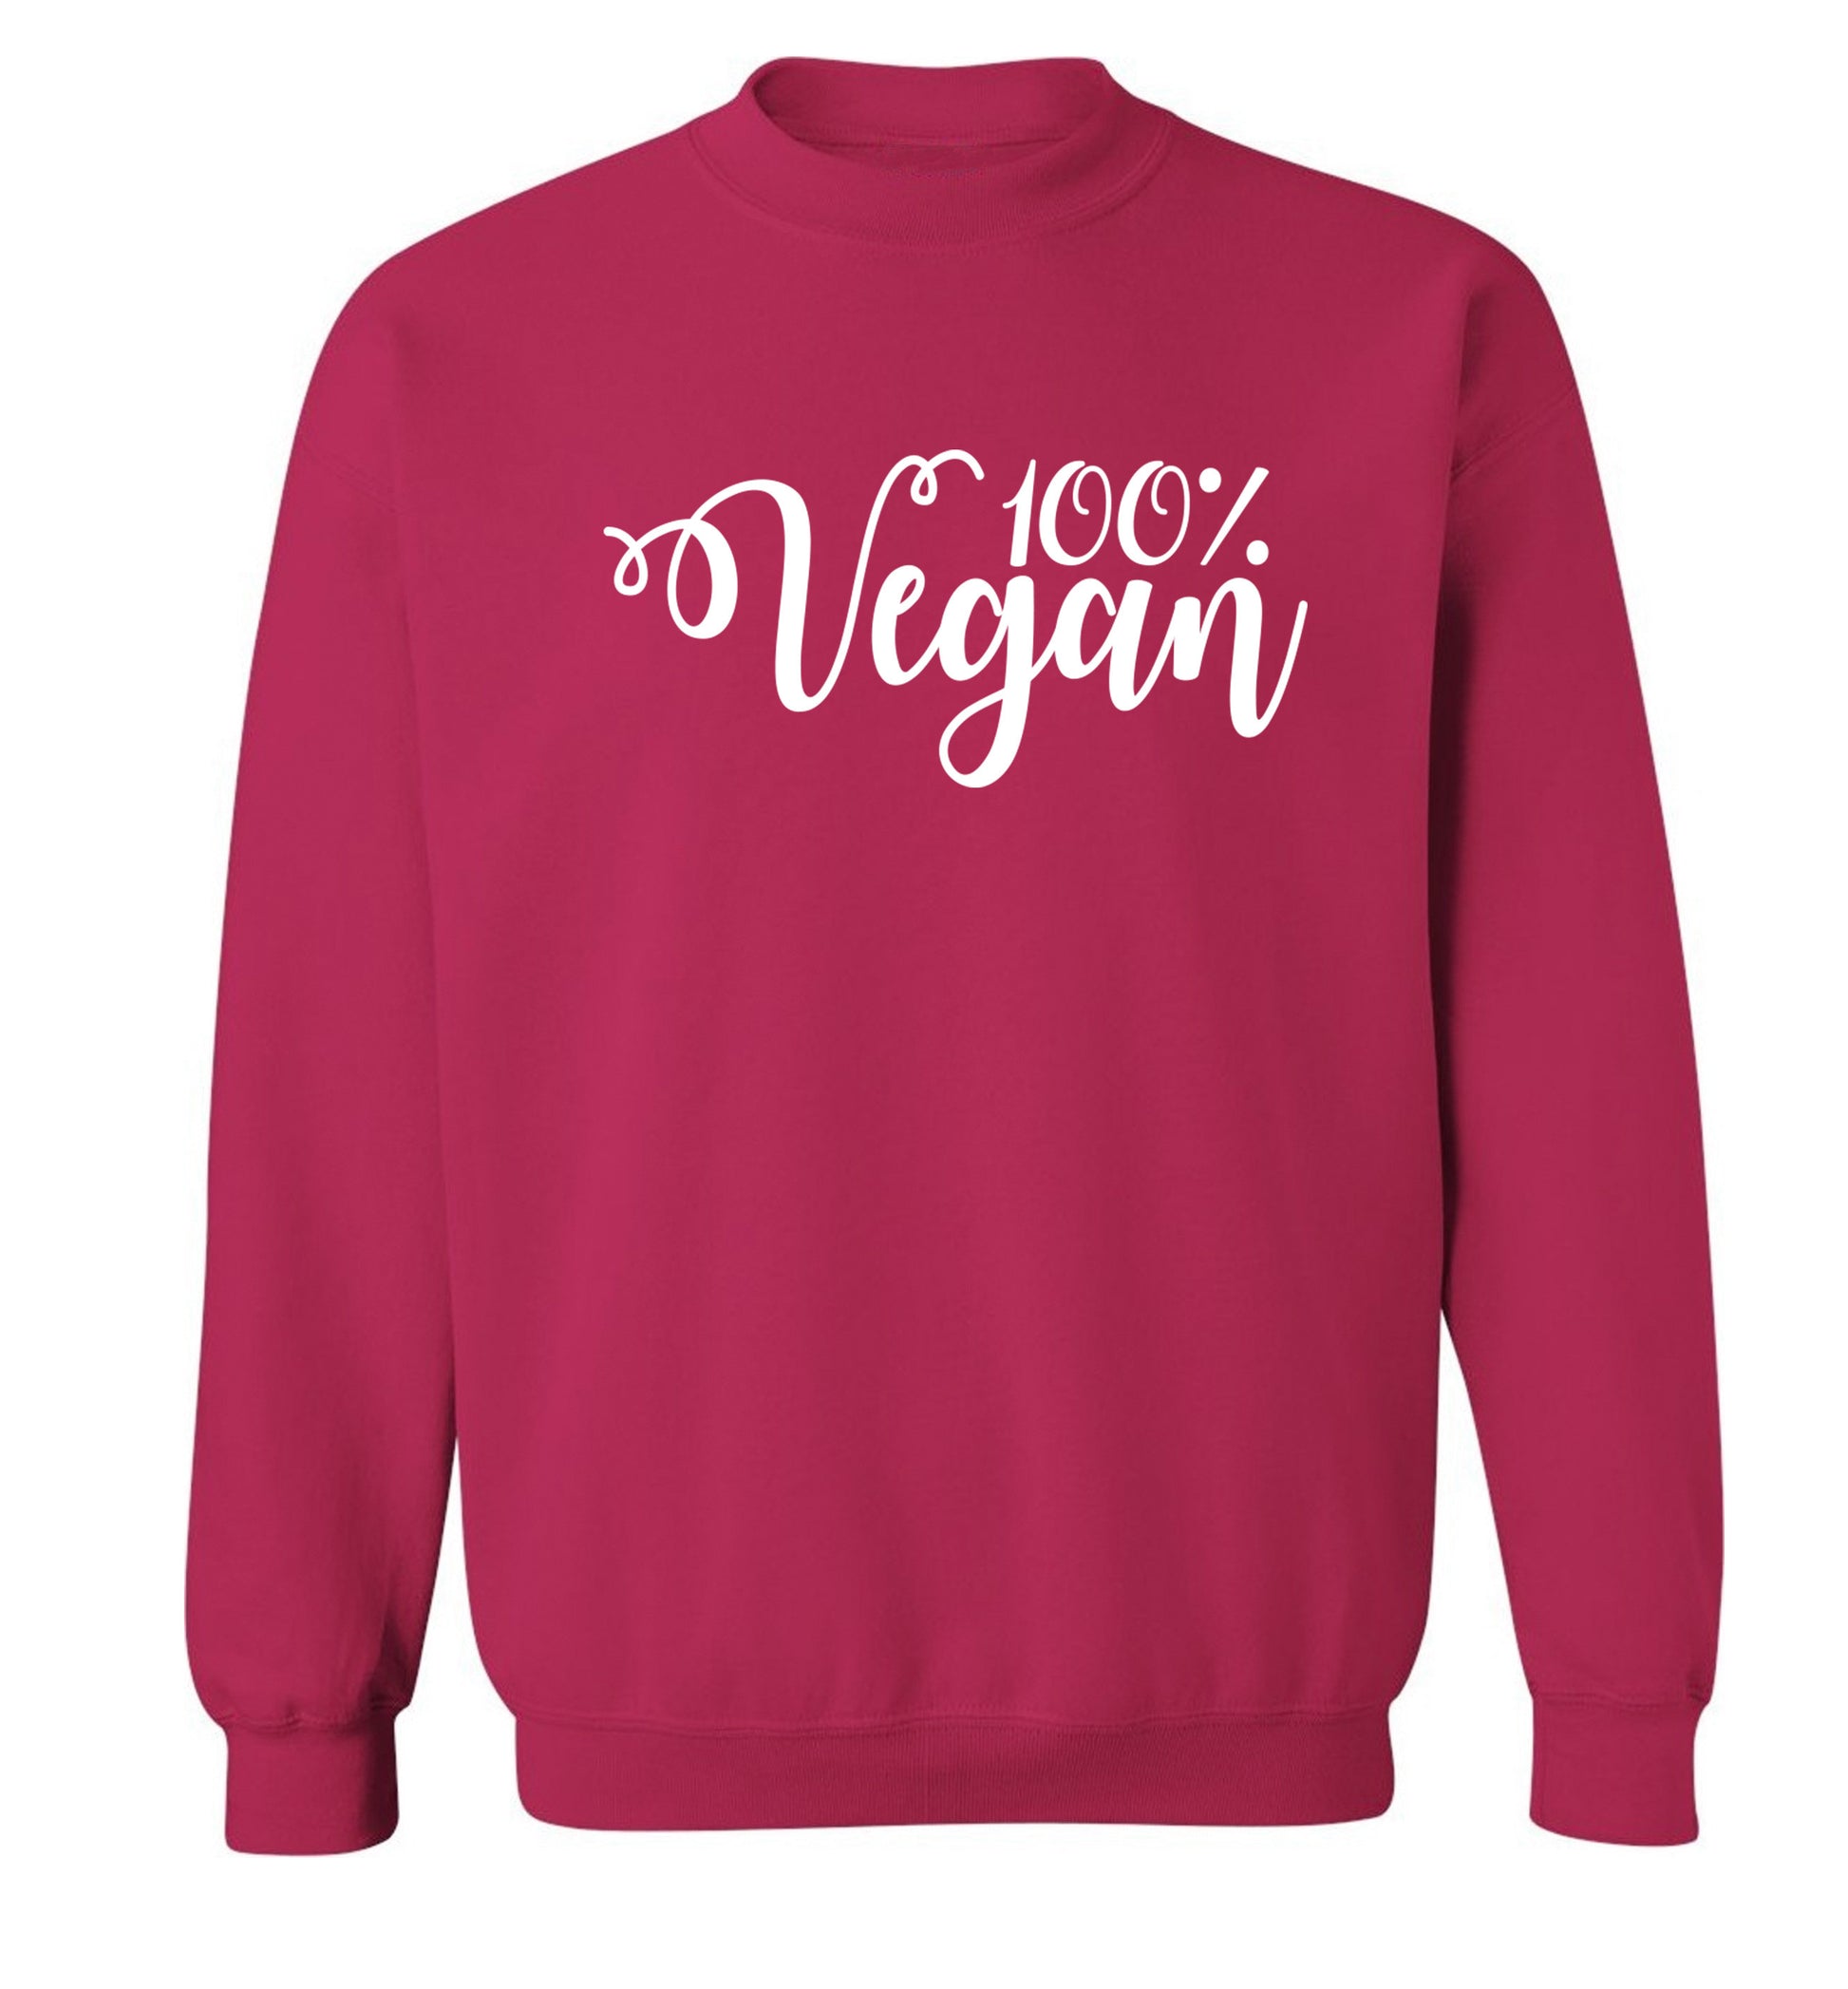 100% Vegan Adult's unisex pink Sweater 2XL